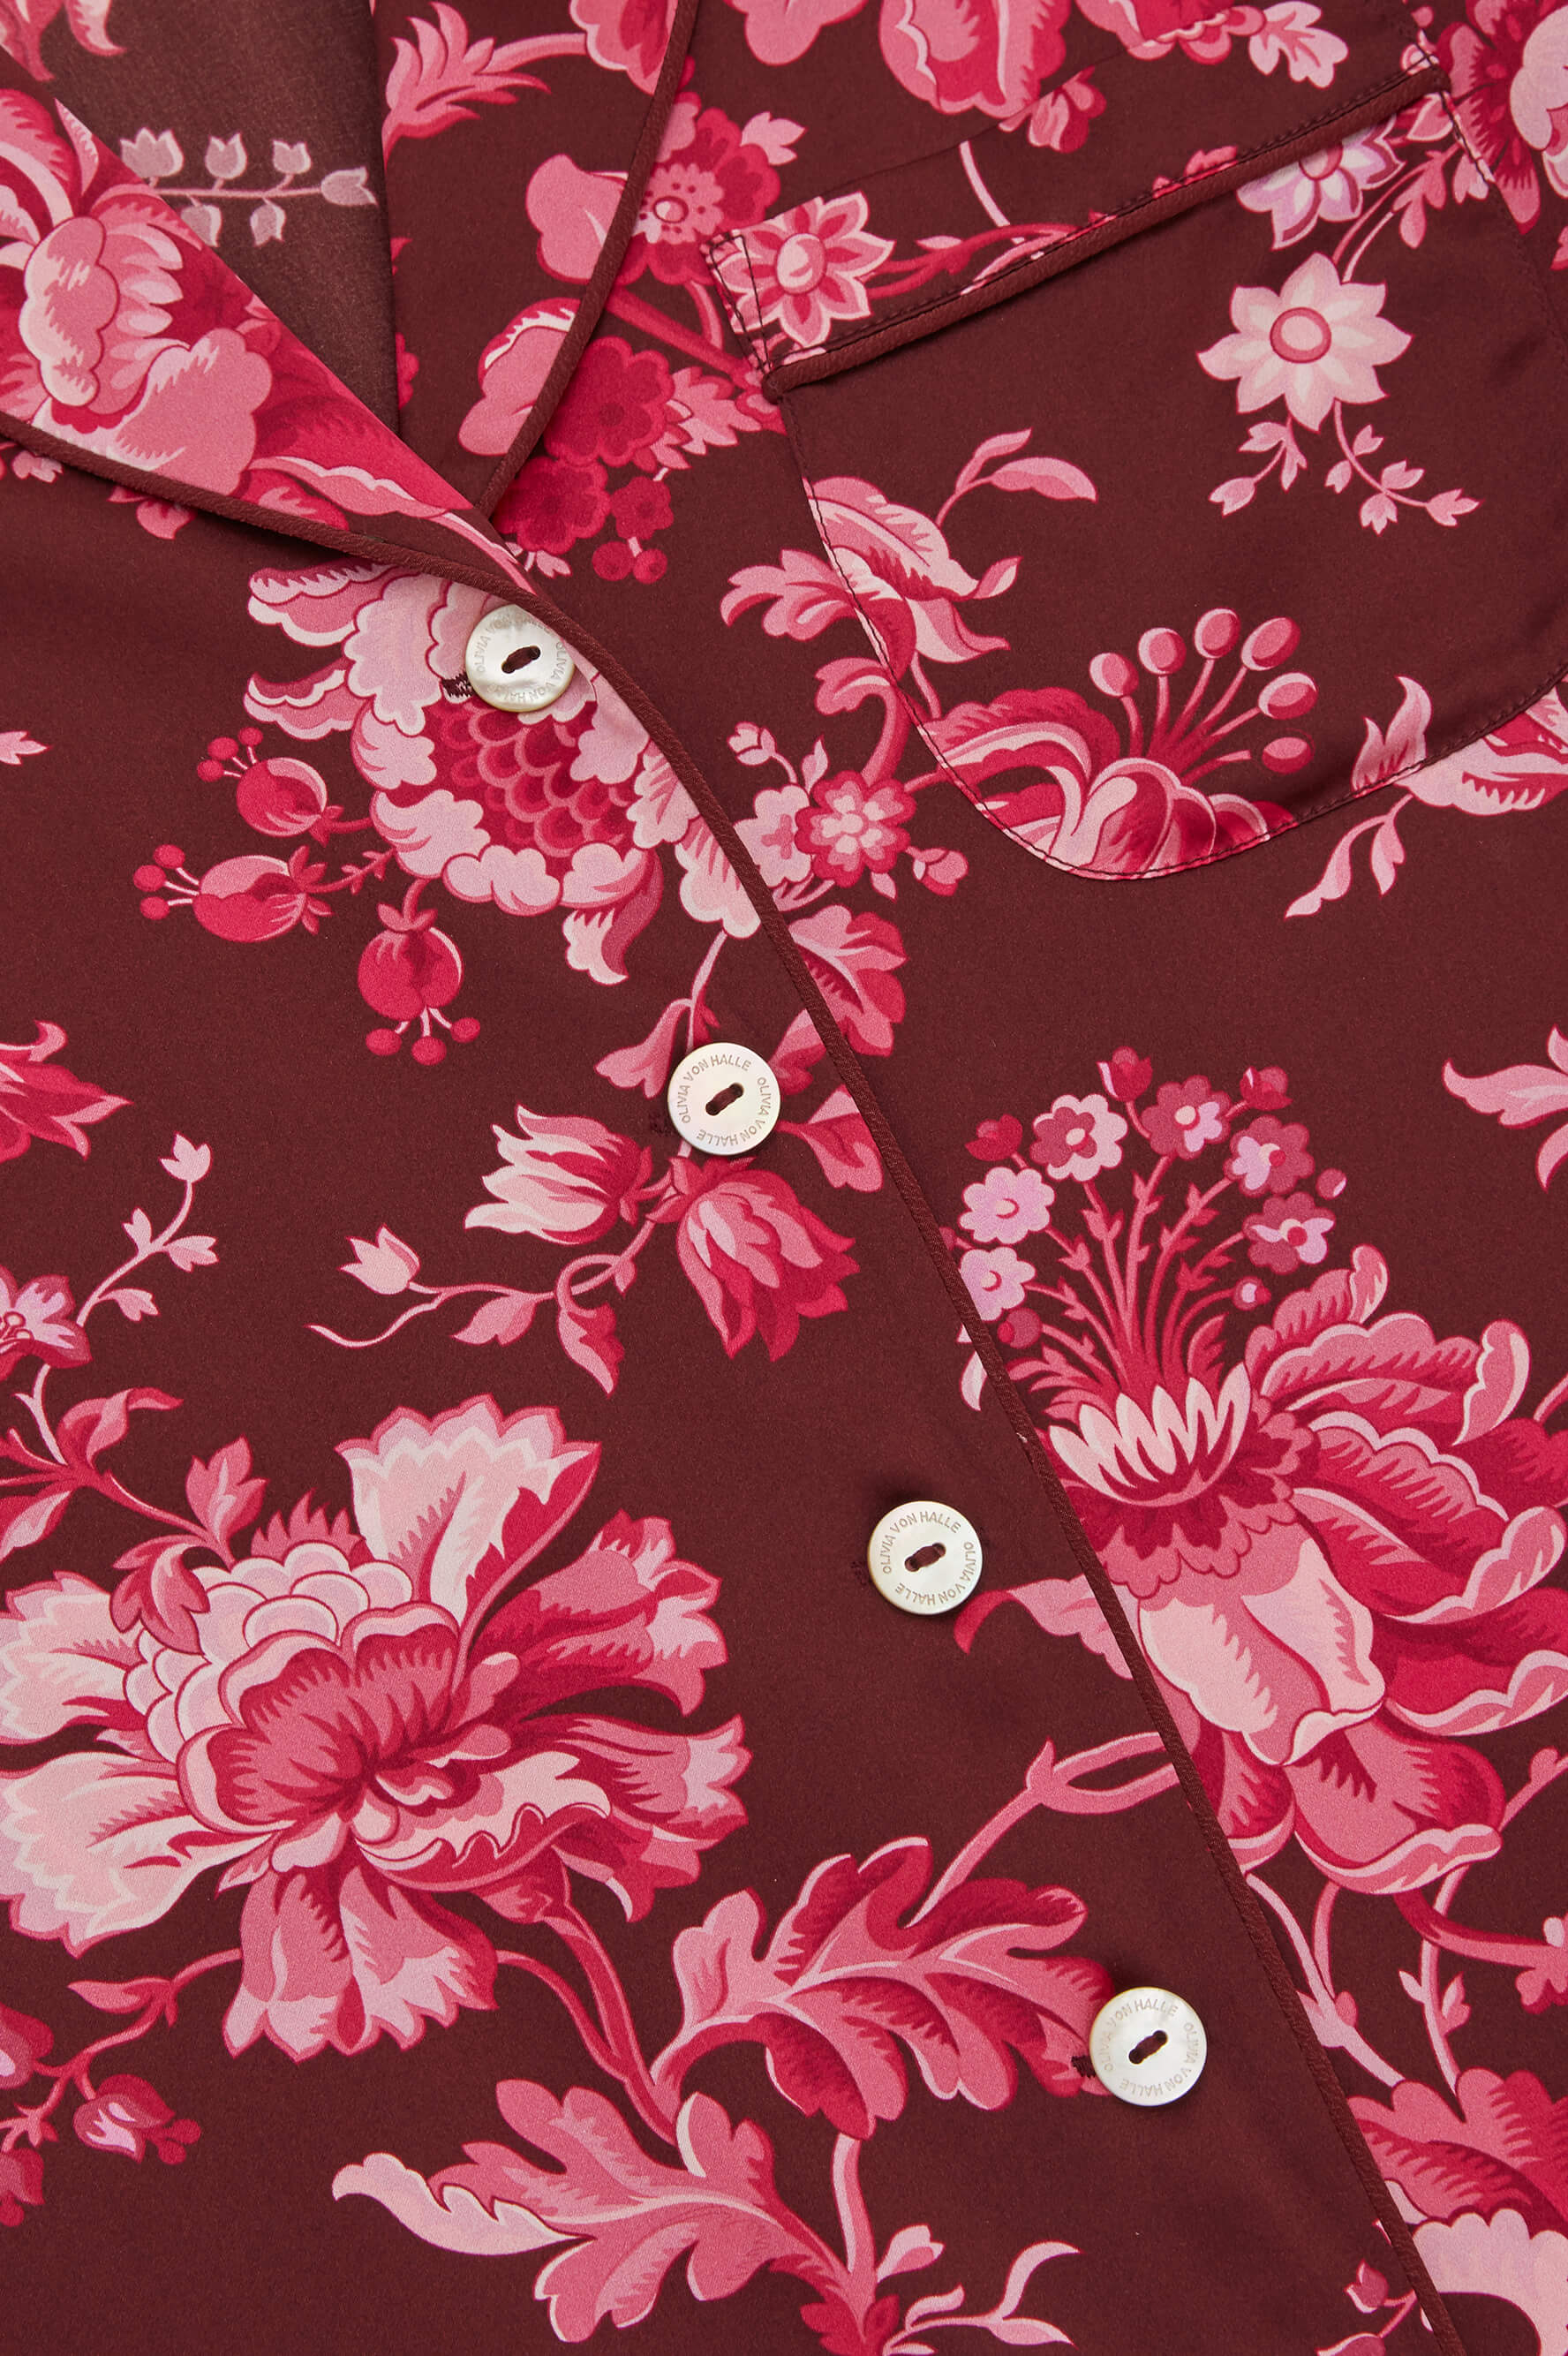 Lila Aphrodite Burgundy Floral Pajamas in Silk Satin